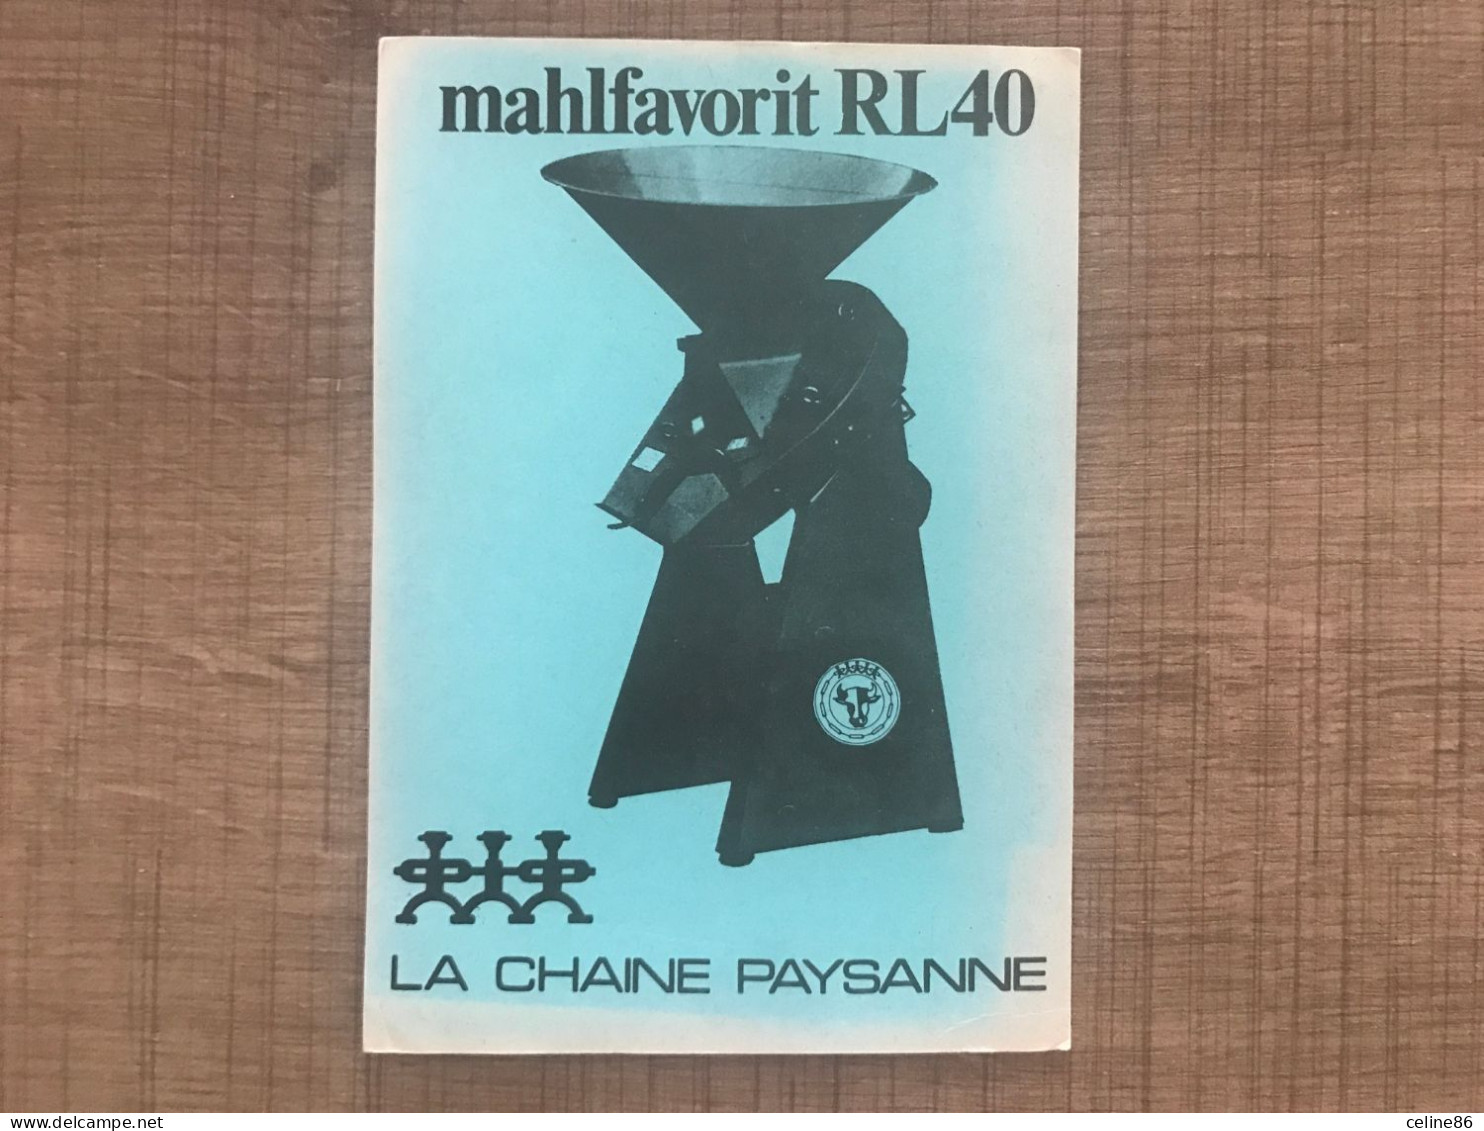 Mahlfavorit RL40 La Chaine Paysanne - Advertising